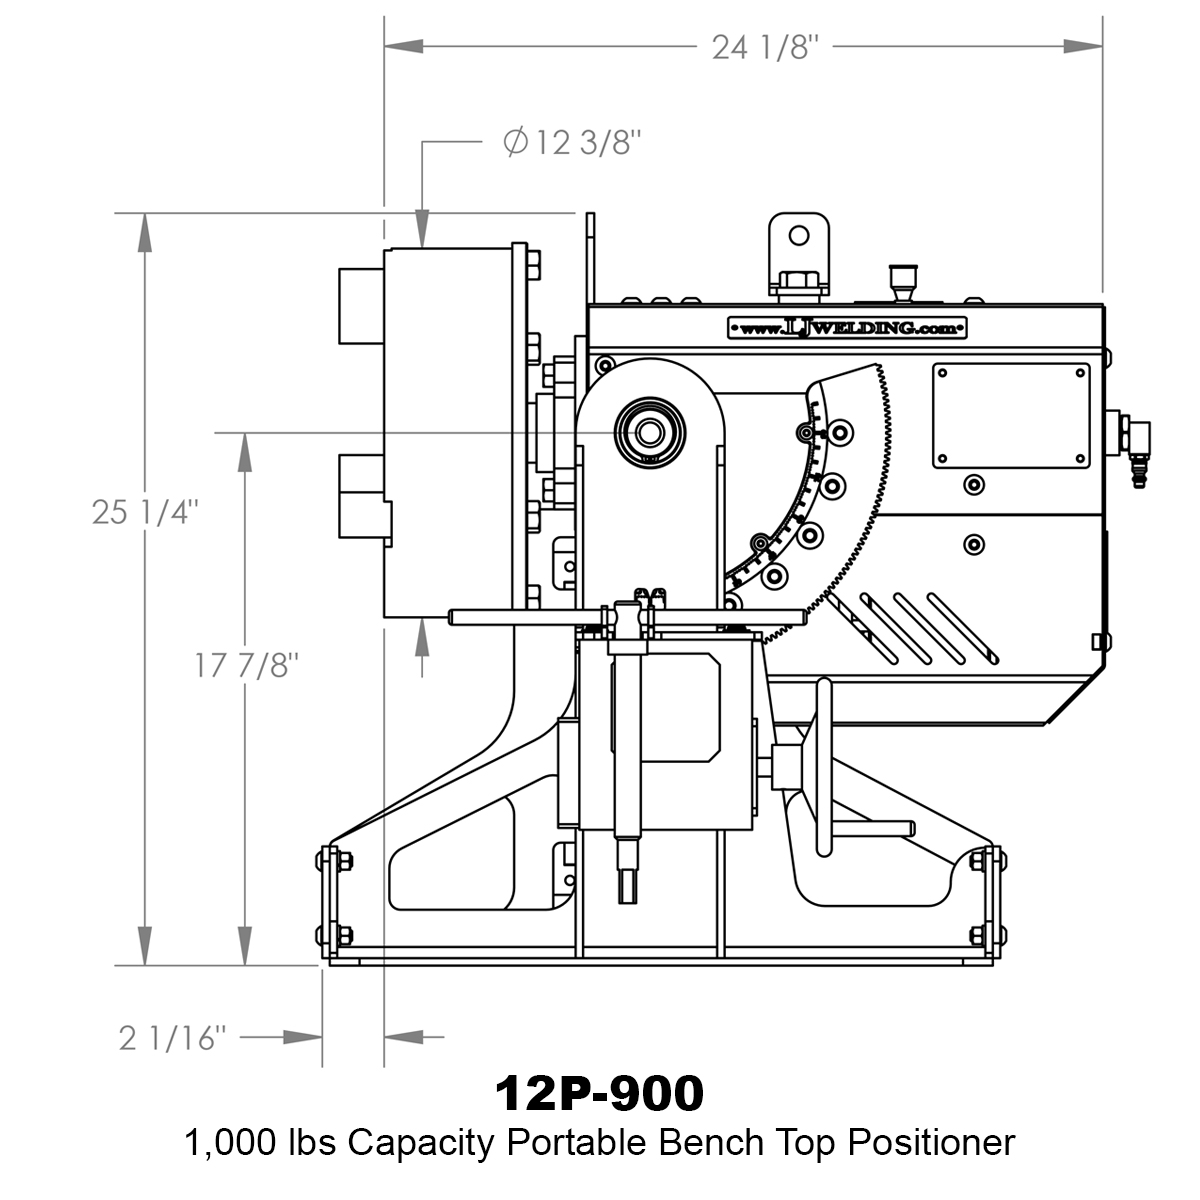 03-1000lb-Portable-Bench-Top-Positioner